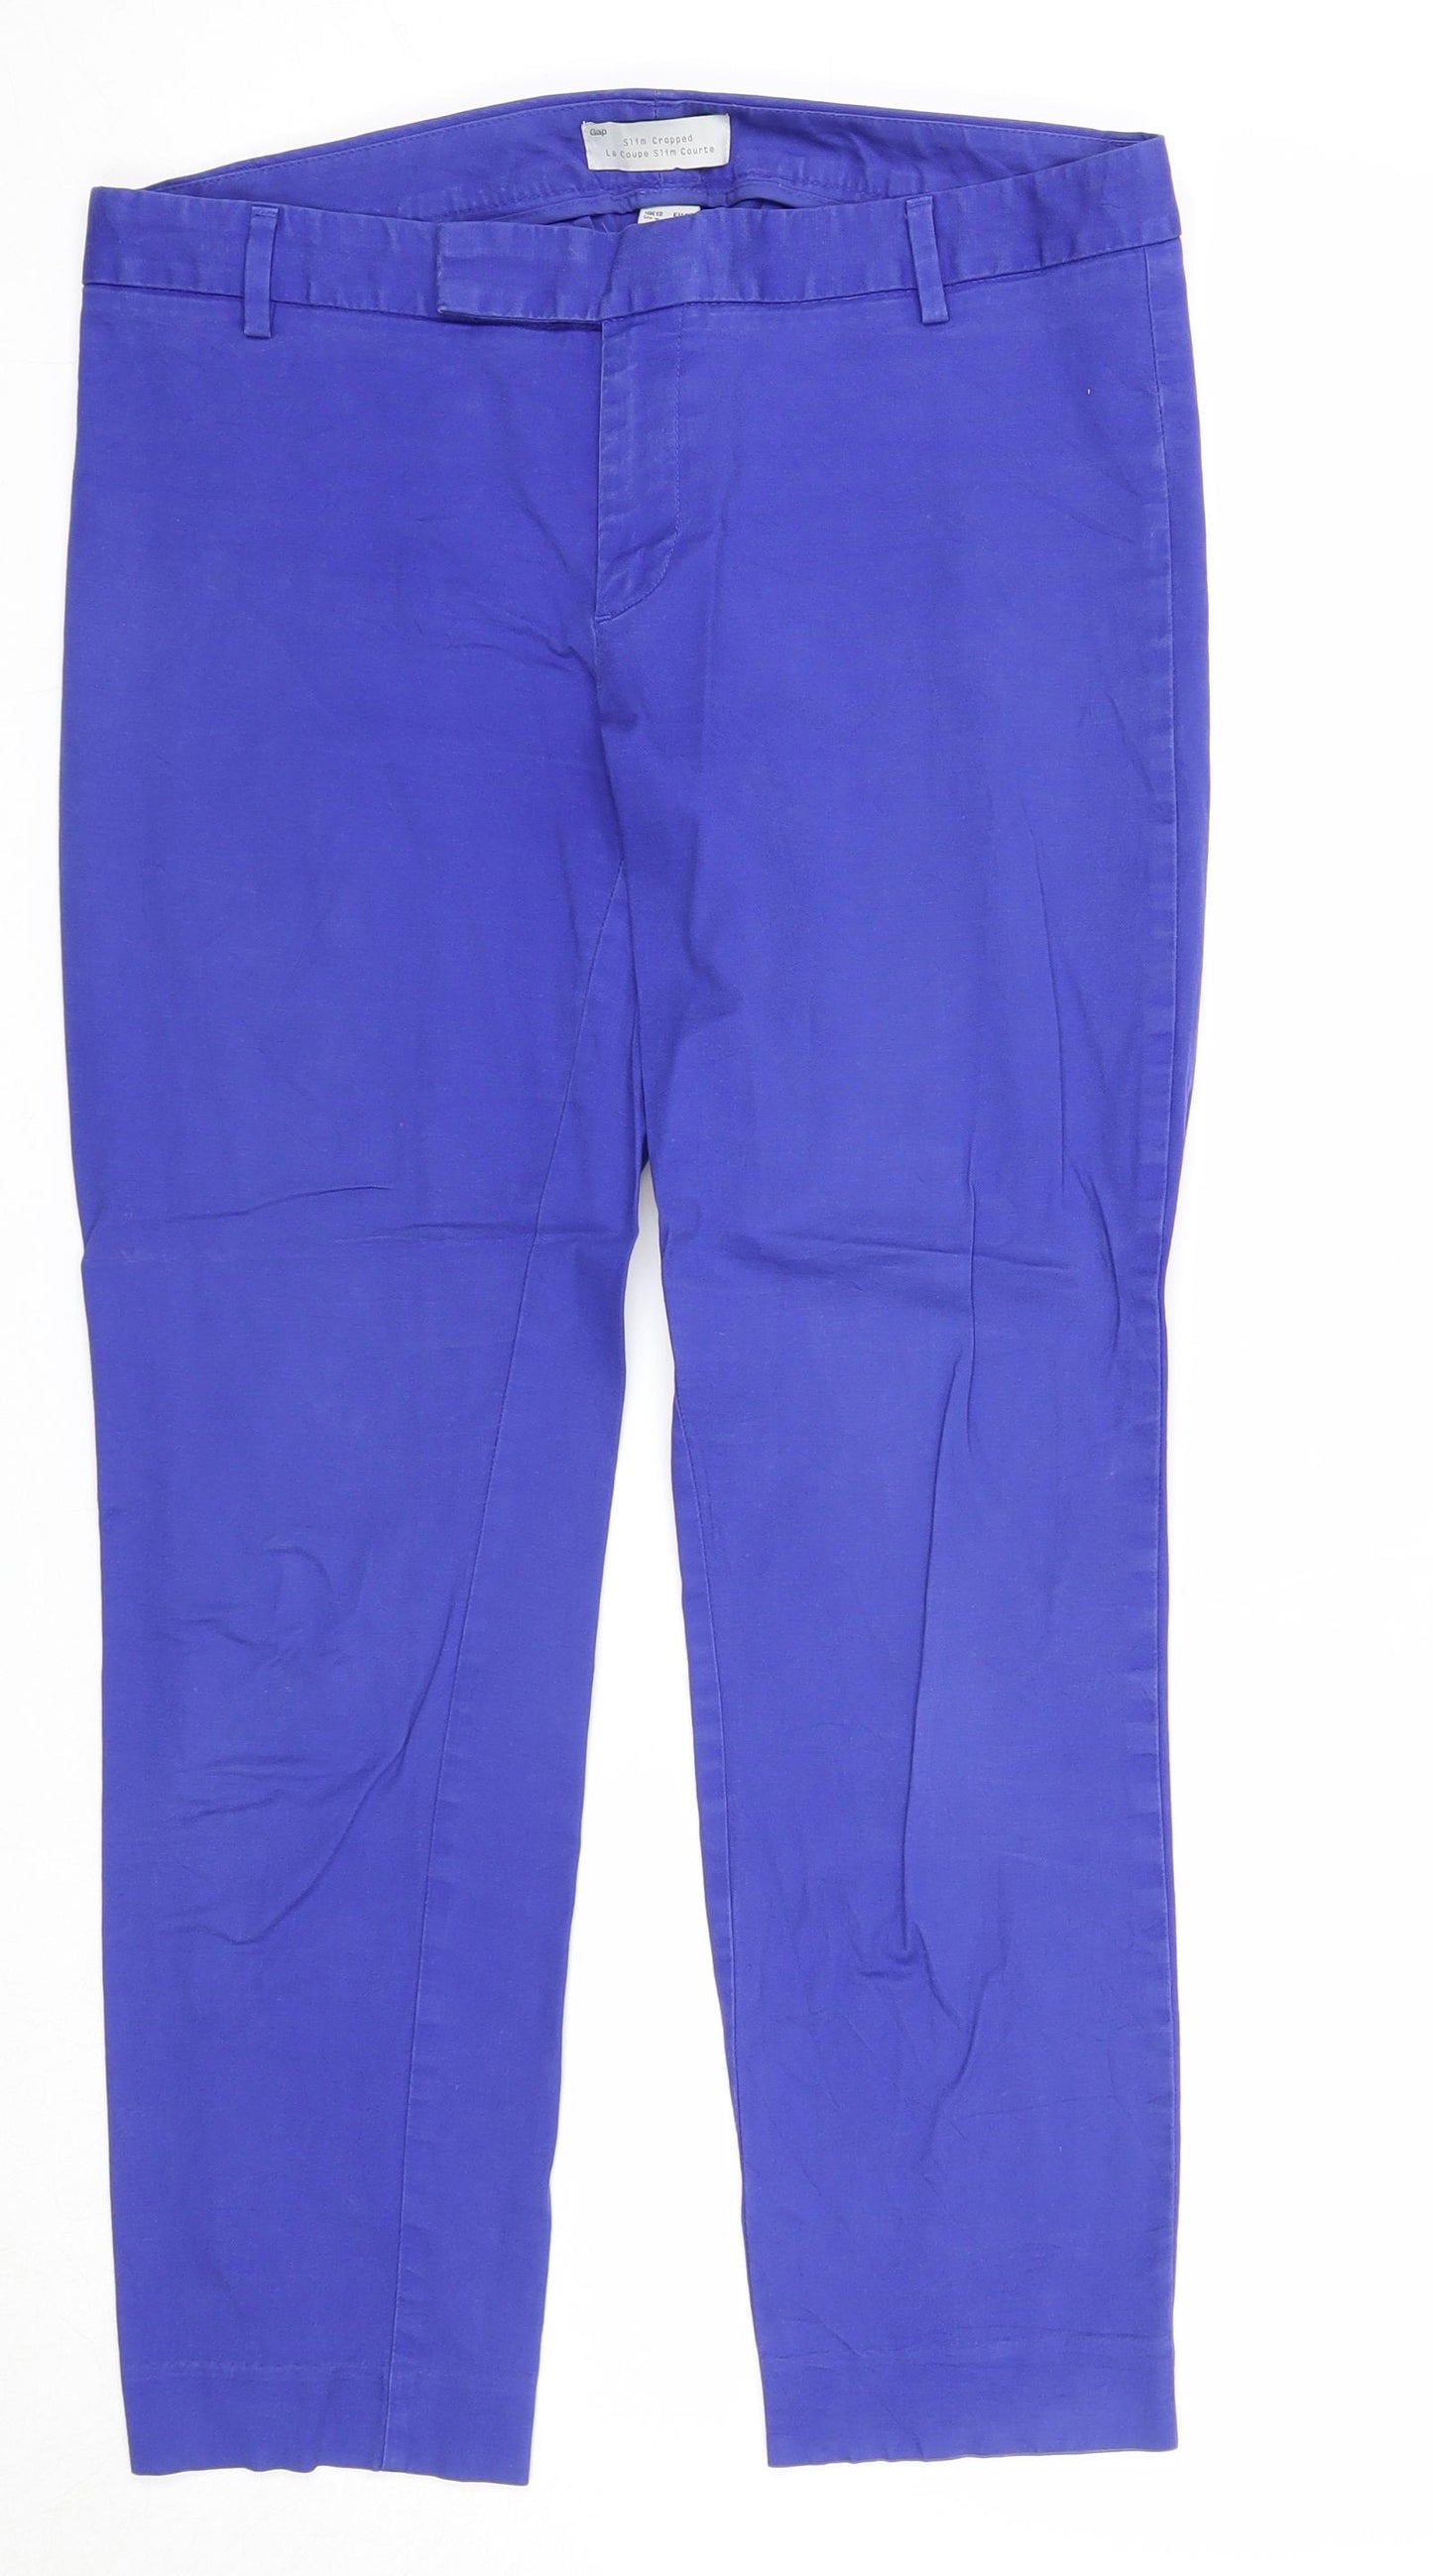 Gap Womens Blue Cotton Trousers Size 12 Slim Zip